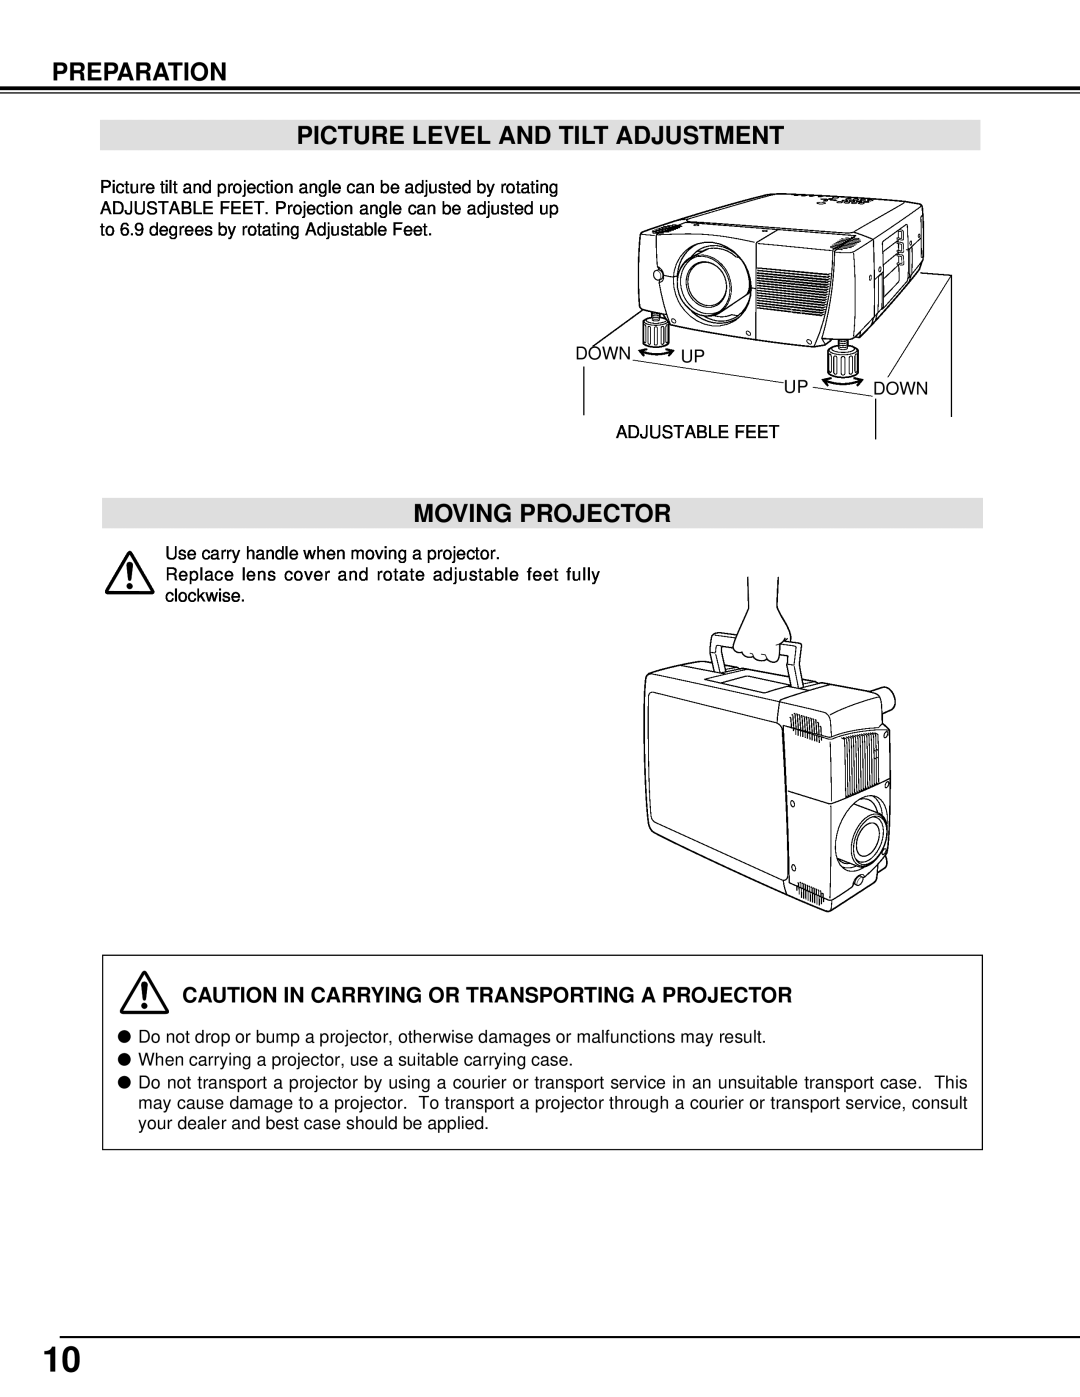 Christie Digital Systems 38-VIV301-01 user manual Preparation Picture Level And Tilt Adjustment, Moving Projector 